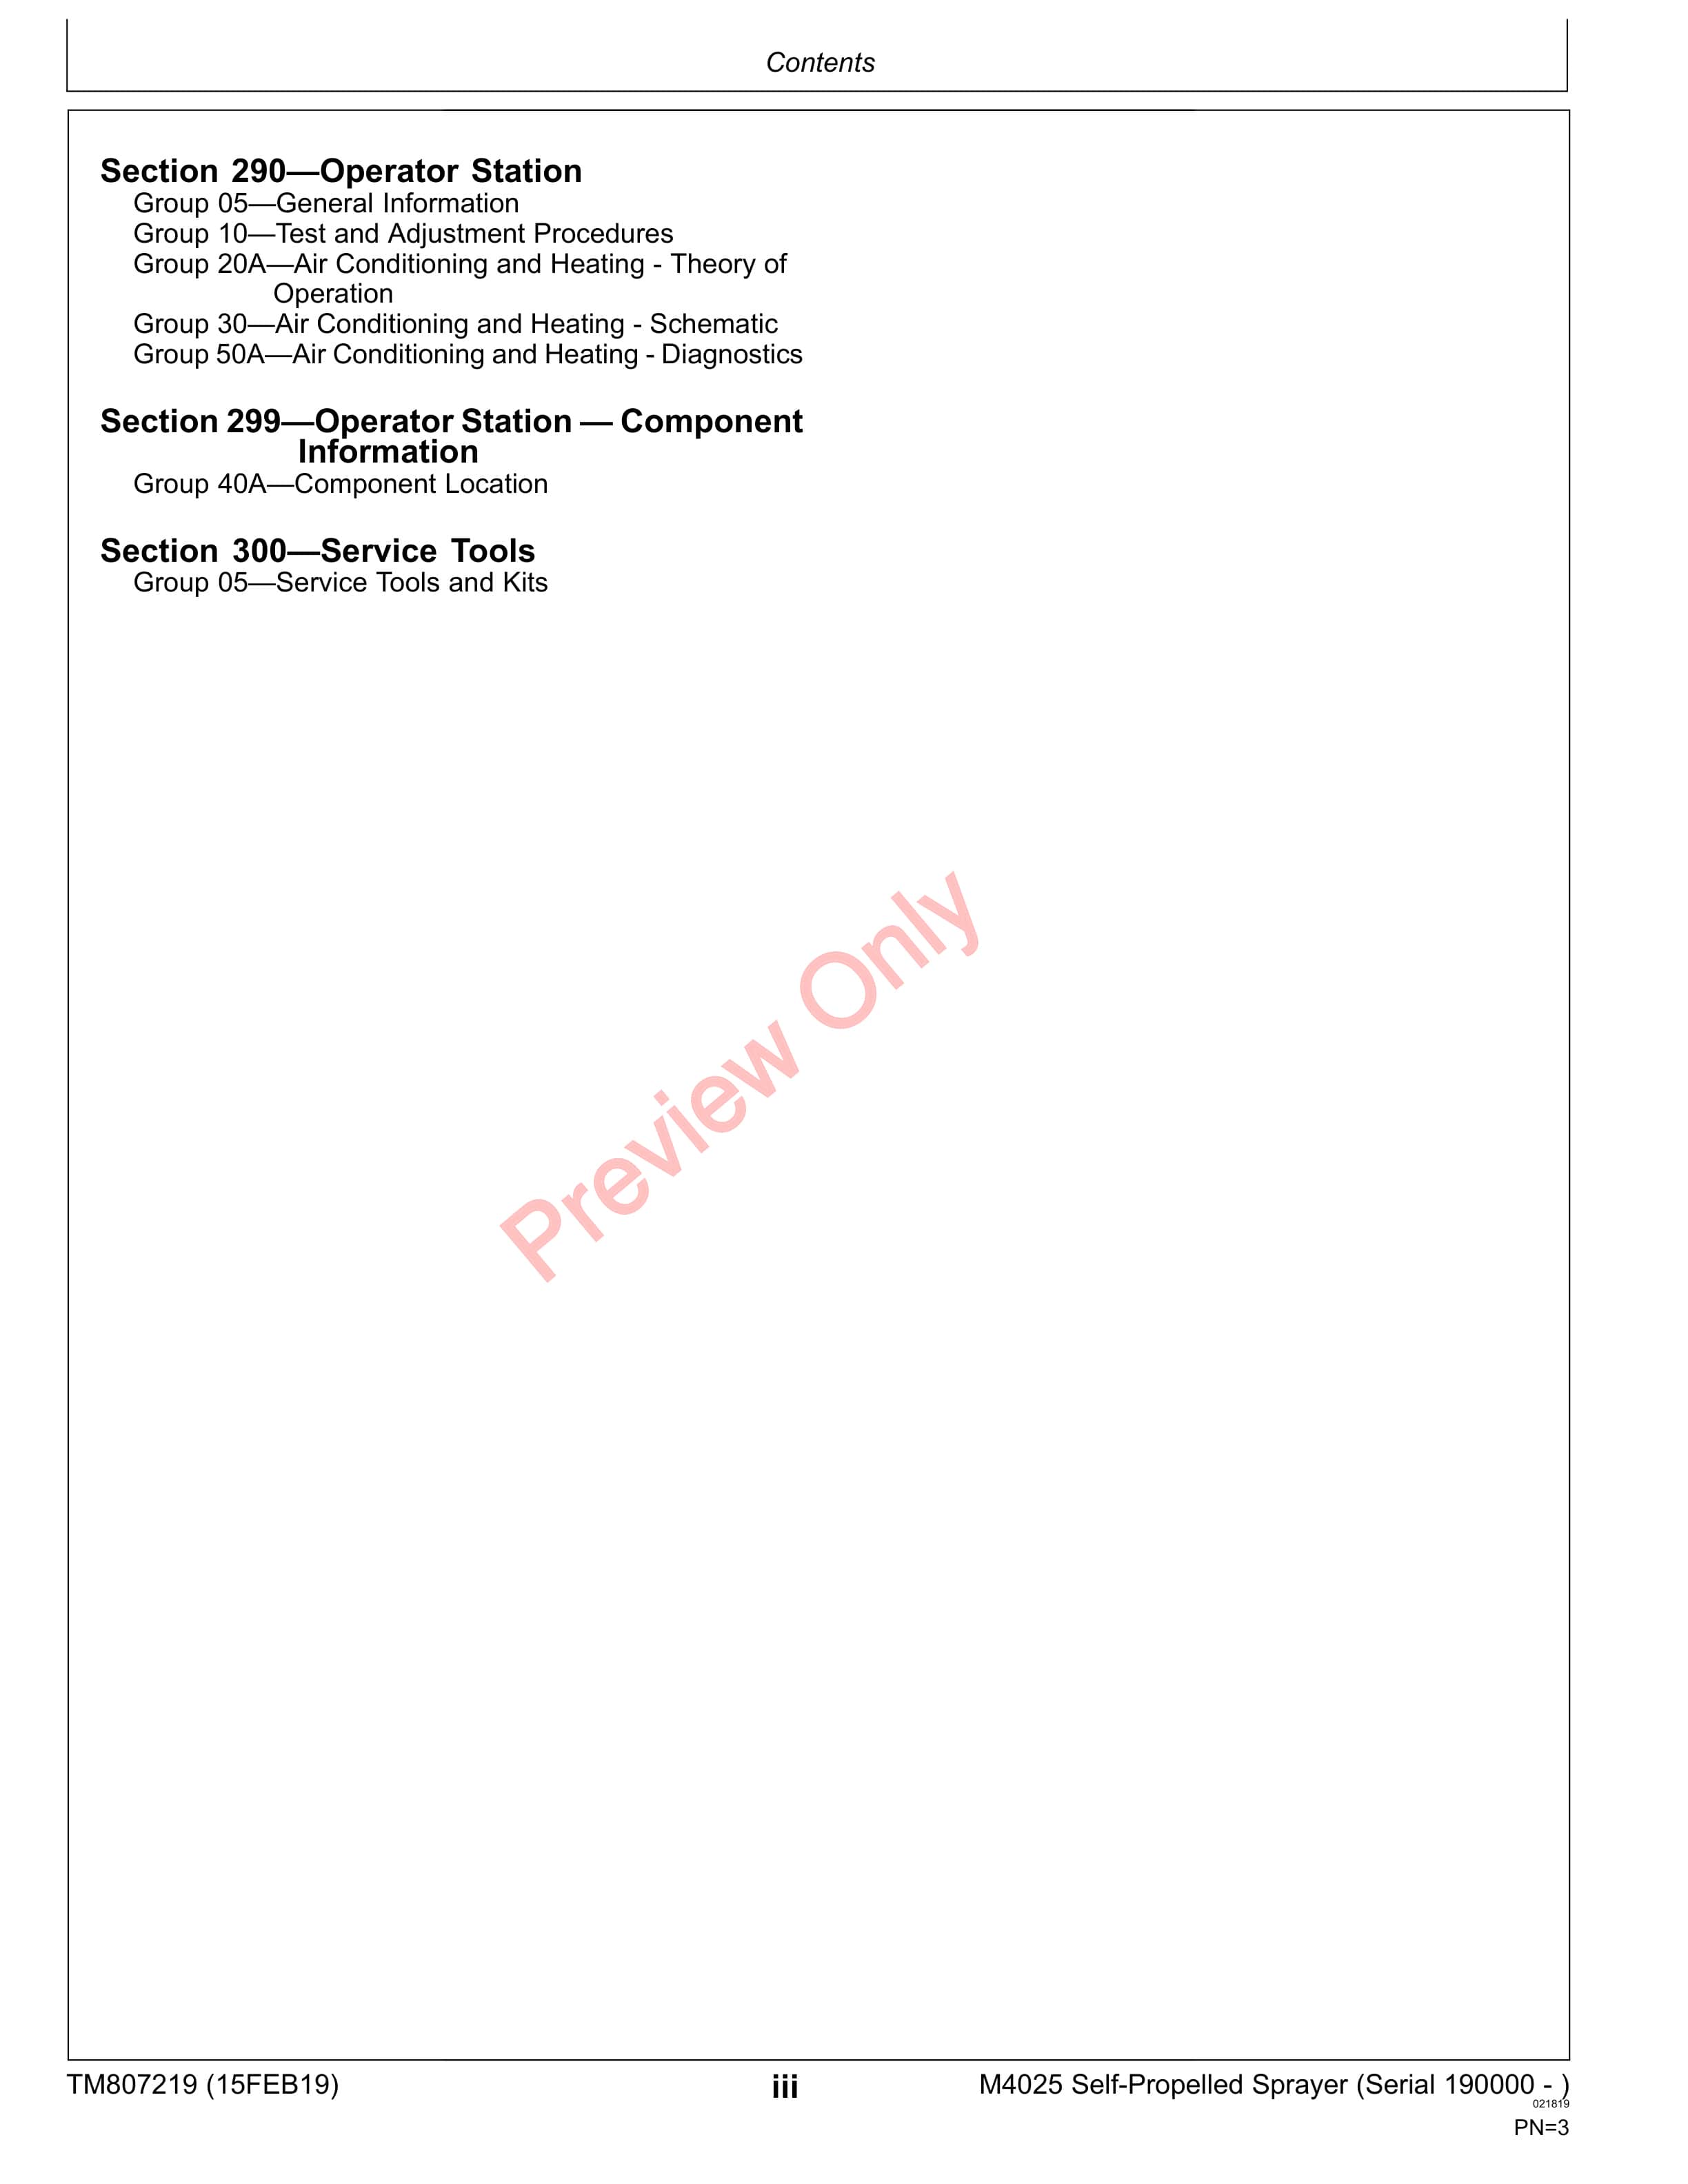 John Deere M4025 Self Propelled Sprayer Diagnostic Technical Manual TM807219 15FEB19 5